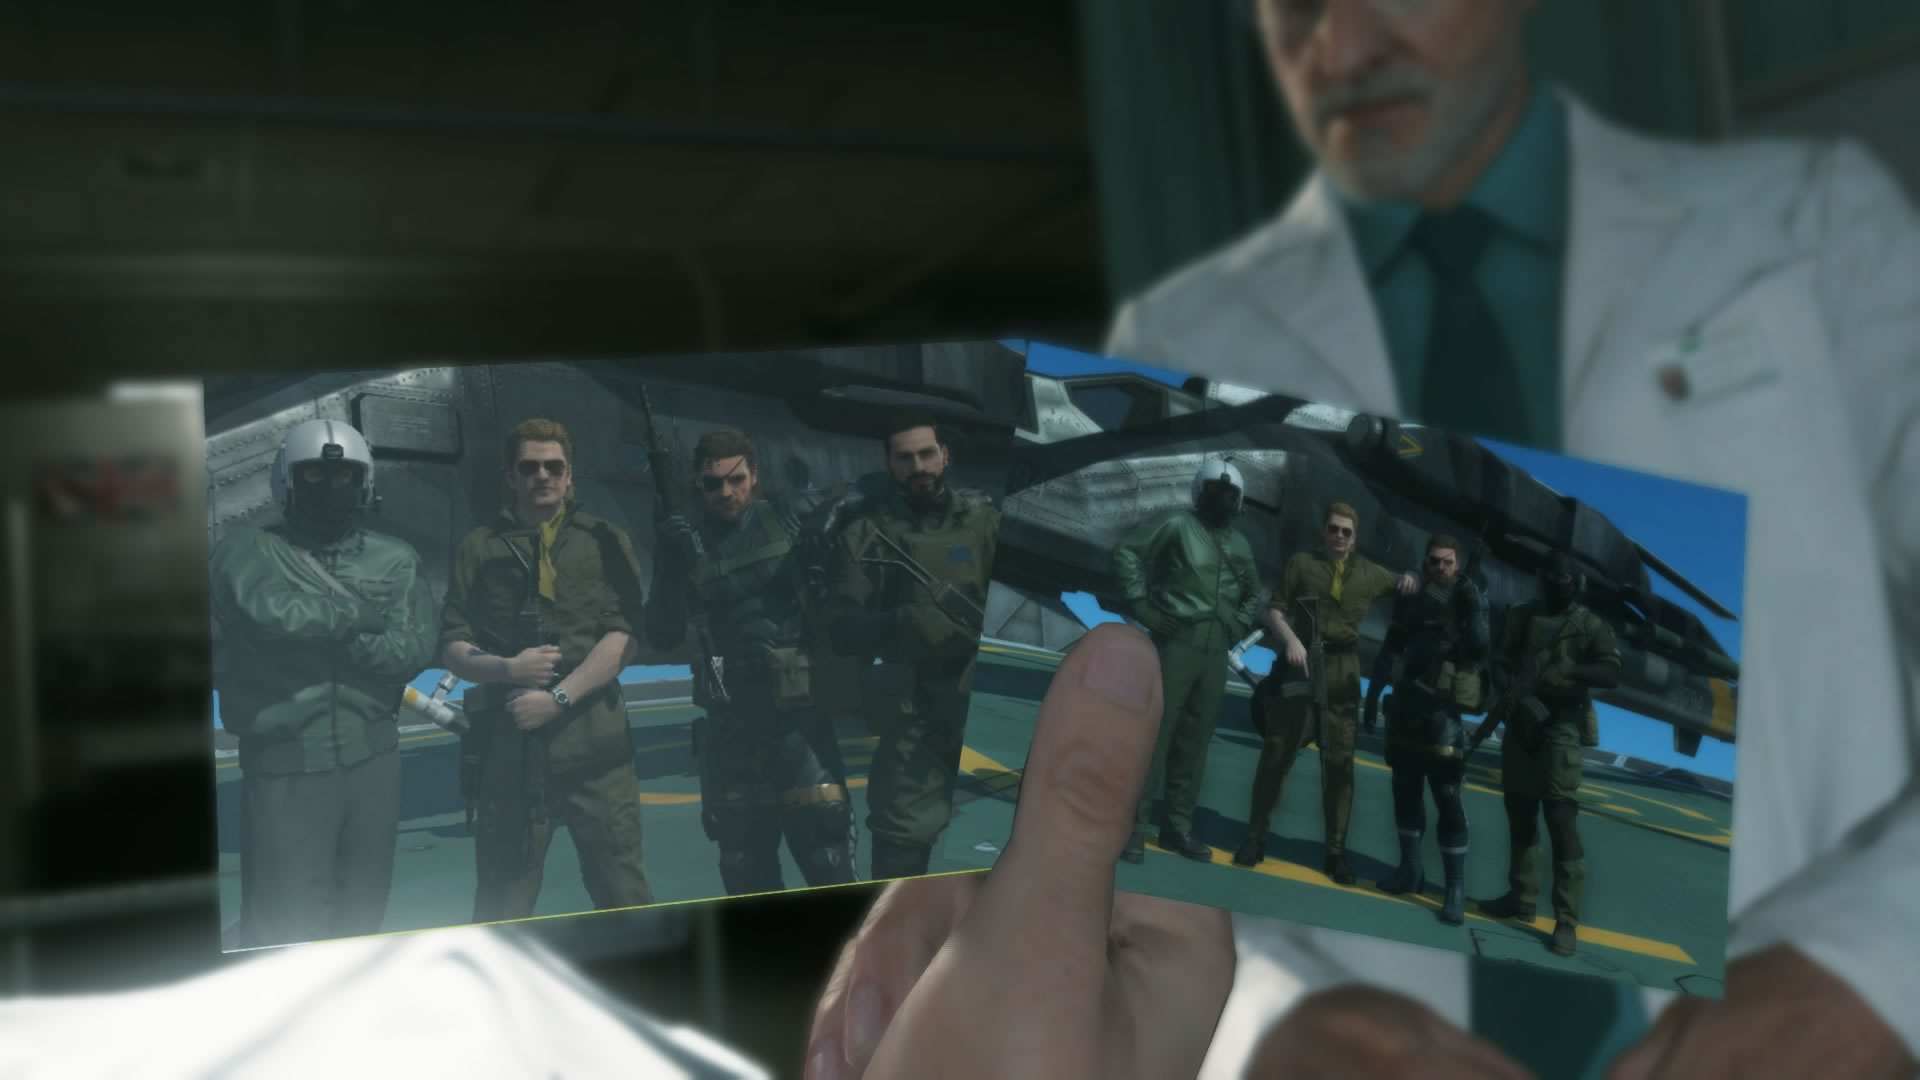 Analyse de Metal Gear Solid V : The Phantom Pain, le mal aim